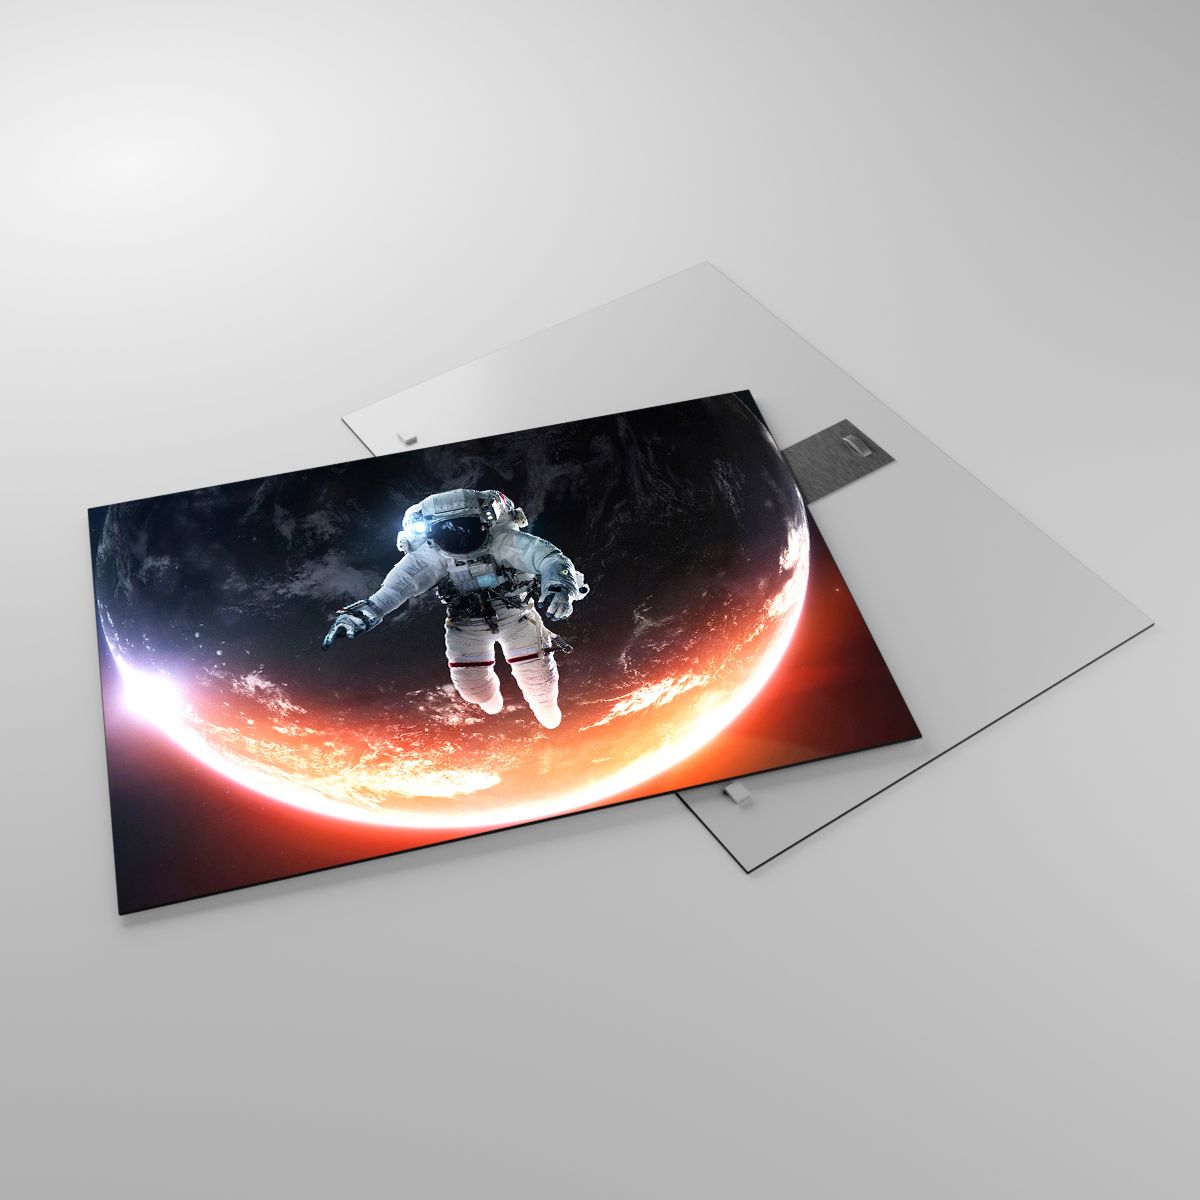 Glasbild Astronaut, Glasbild Kosmos, Glasbild Kosmonaut, Glasbild Planet Erde, Glasbild Abstraktion